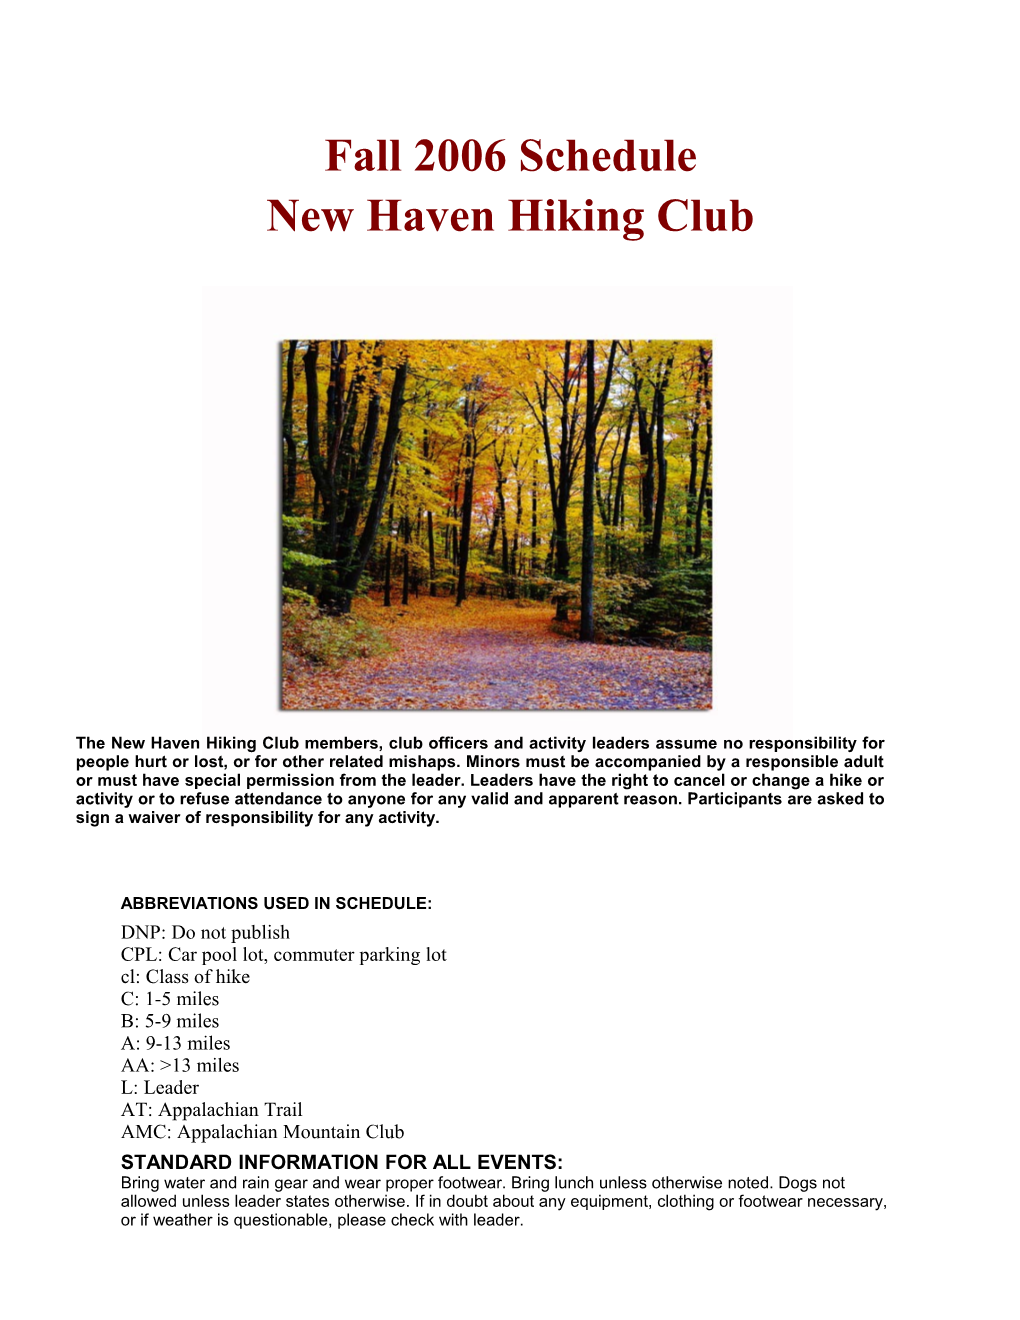 New Haven Hiking Club